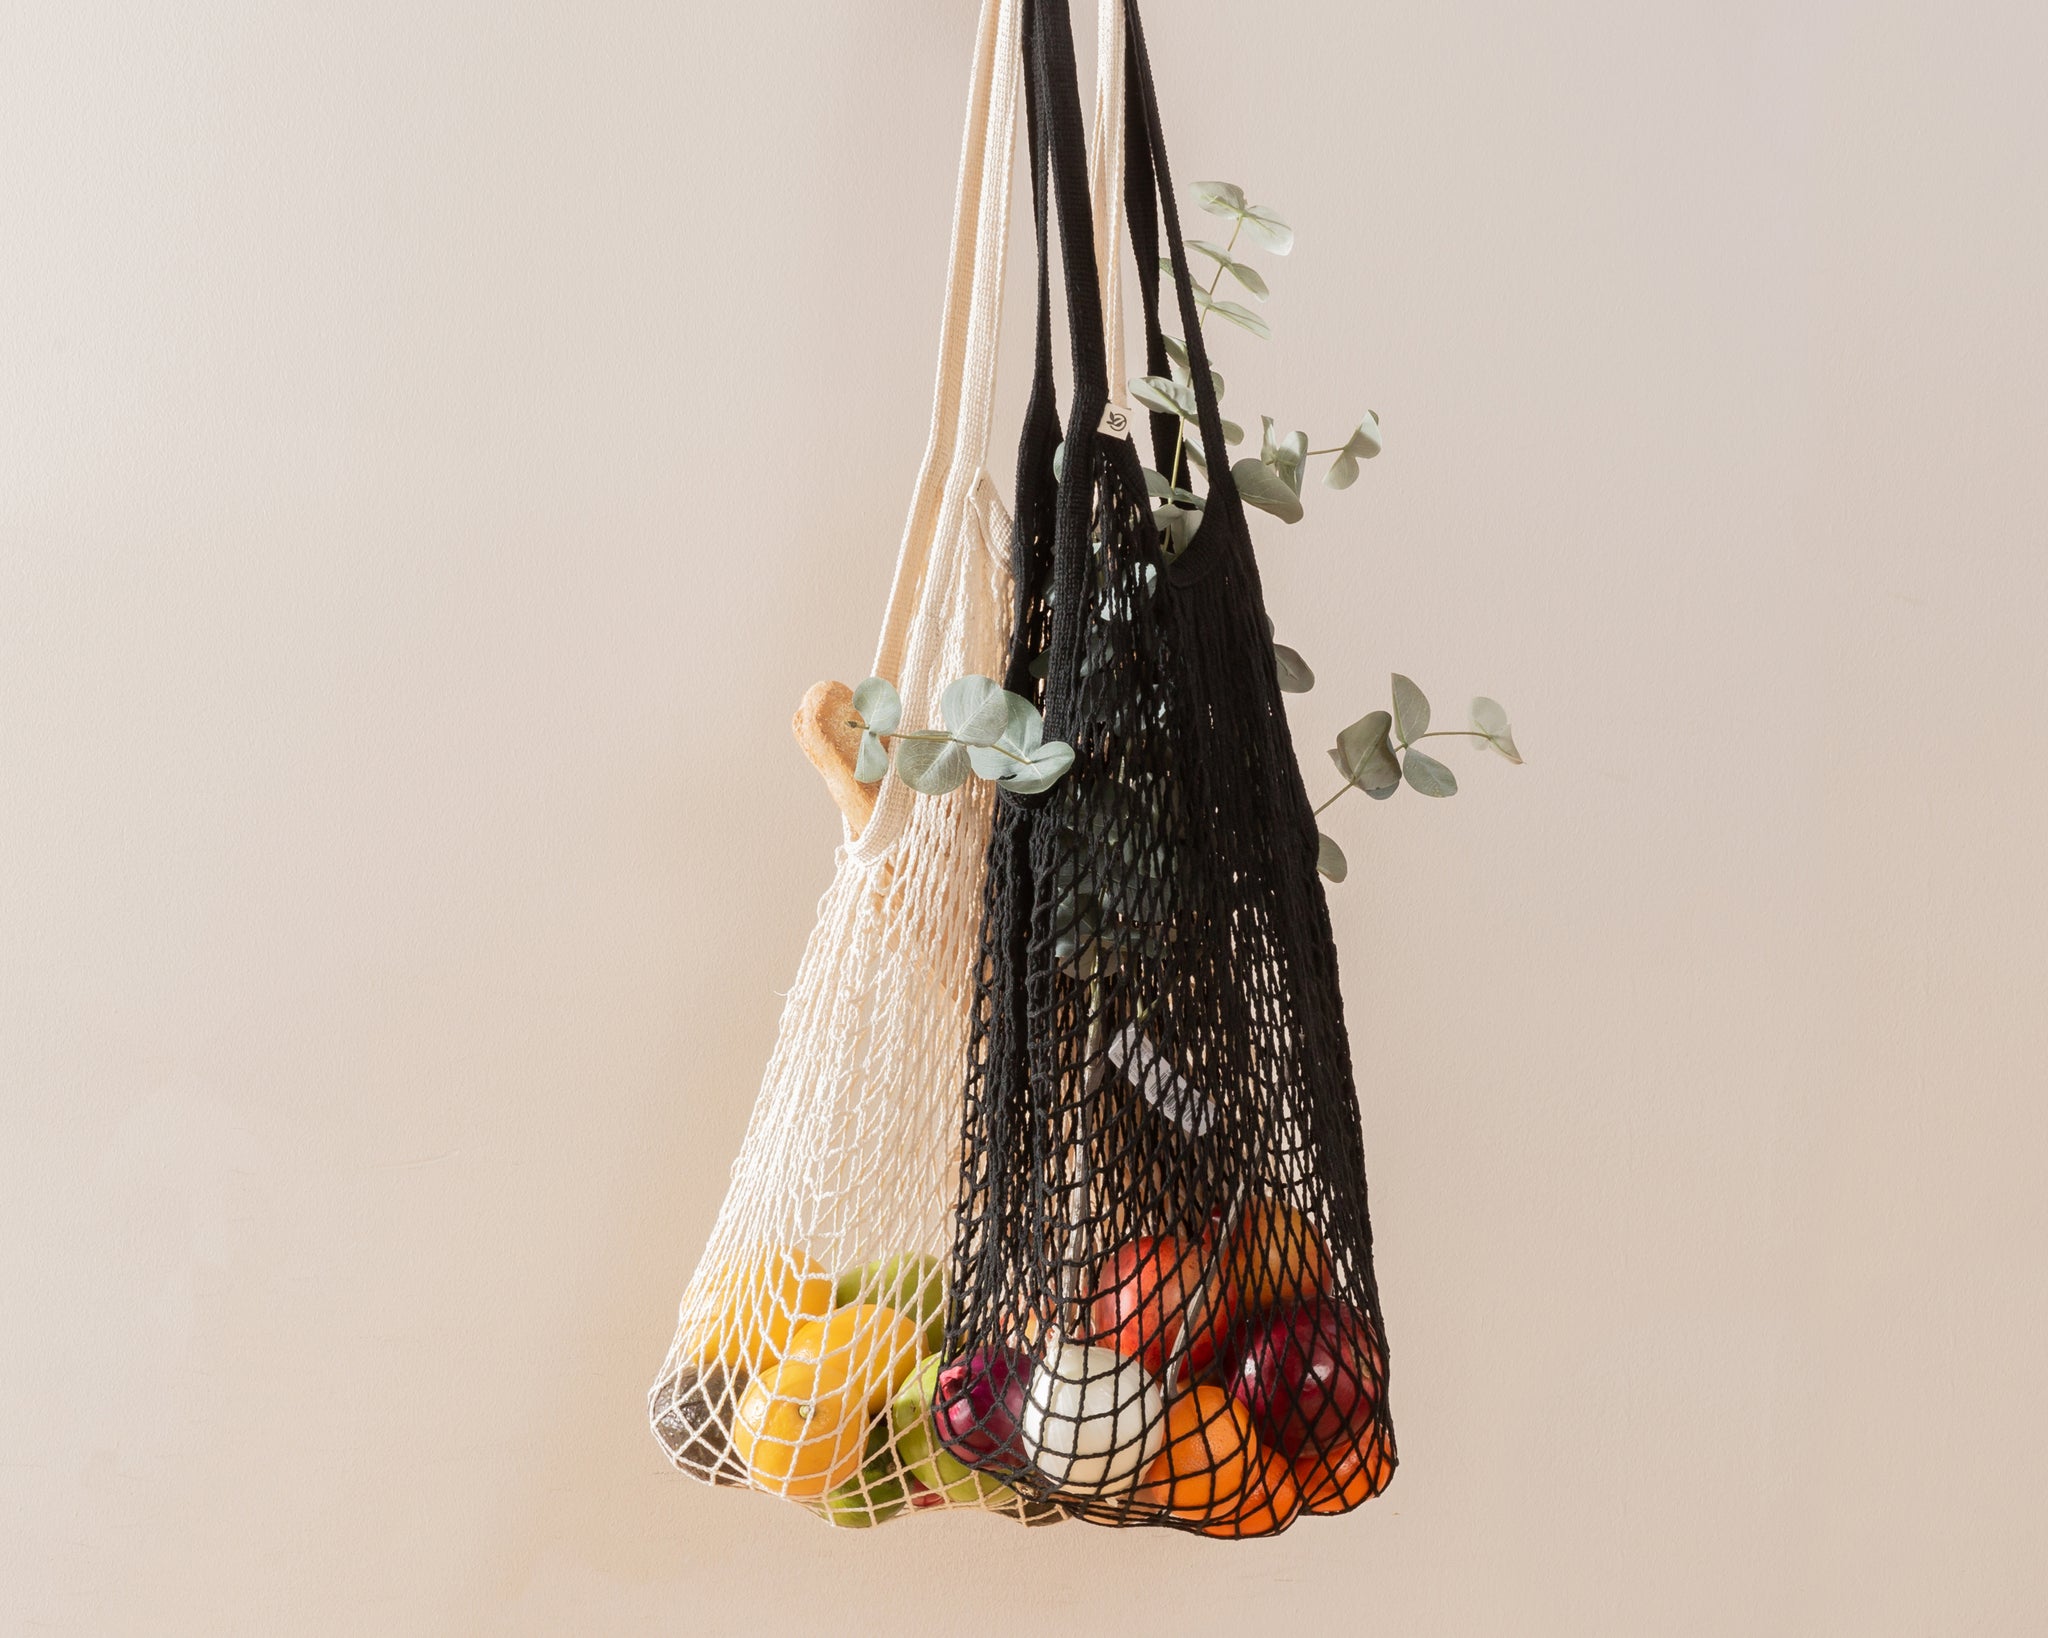 Cotton Mesh Bag, 15x12.2 Long Handle Mesh Net String Grocery Bags Orange